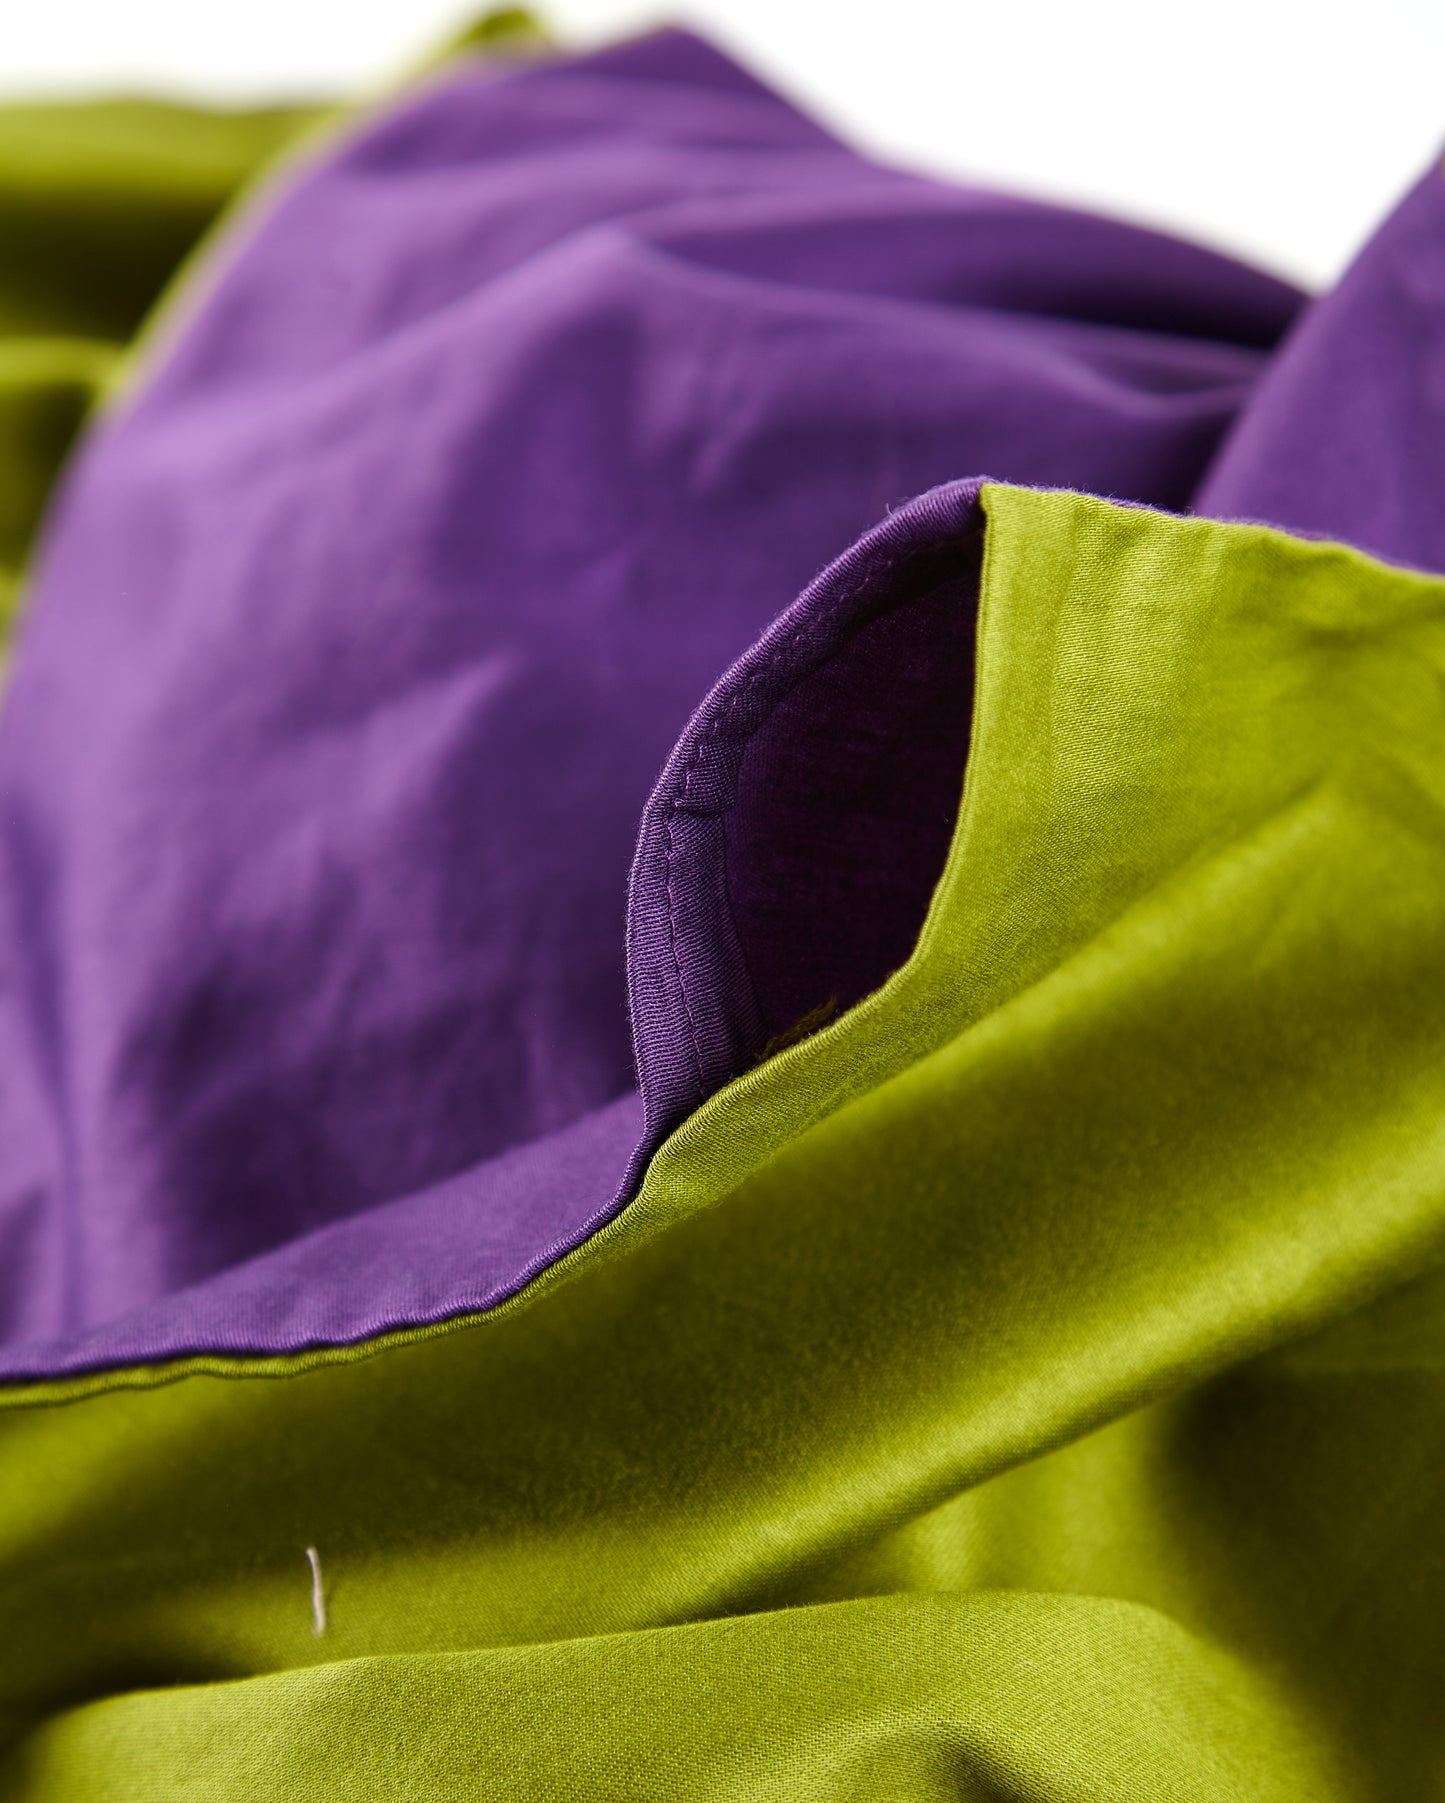 Reversible Sateen Bedding Set - Purple & Green